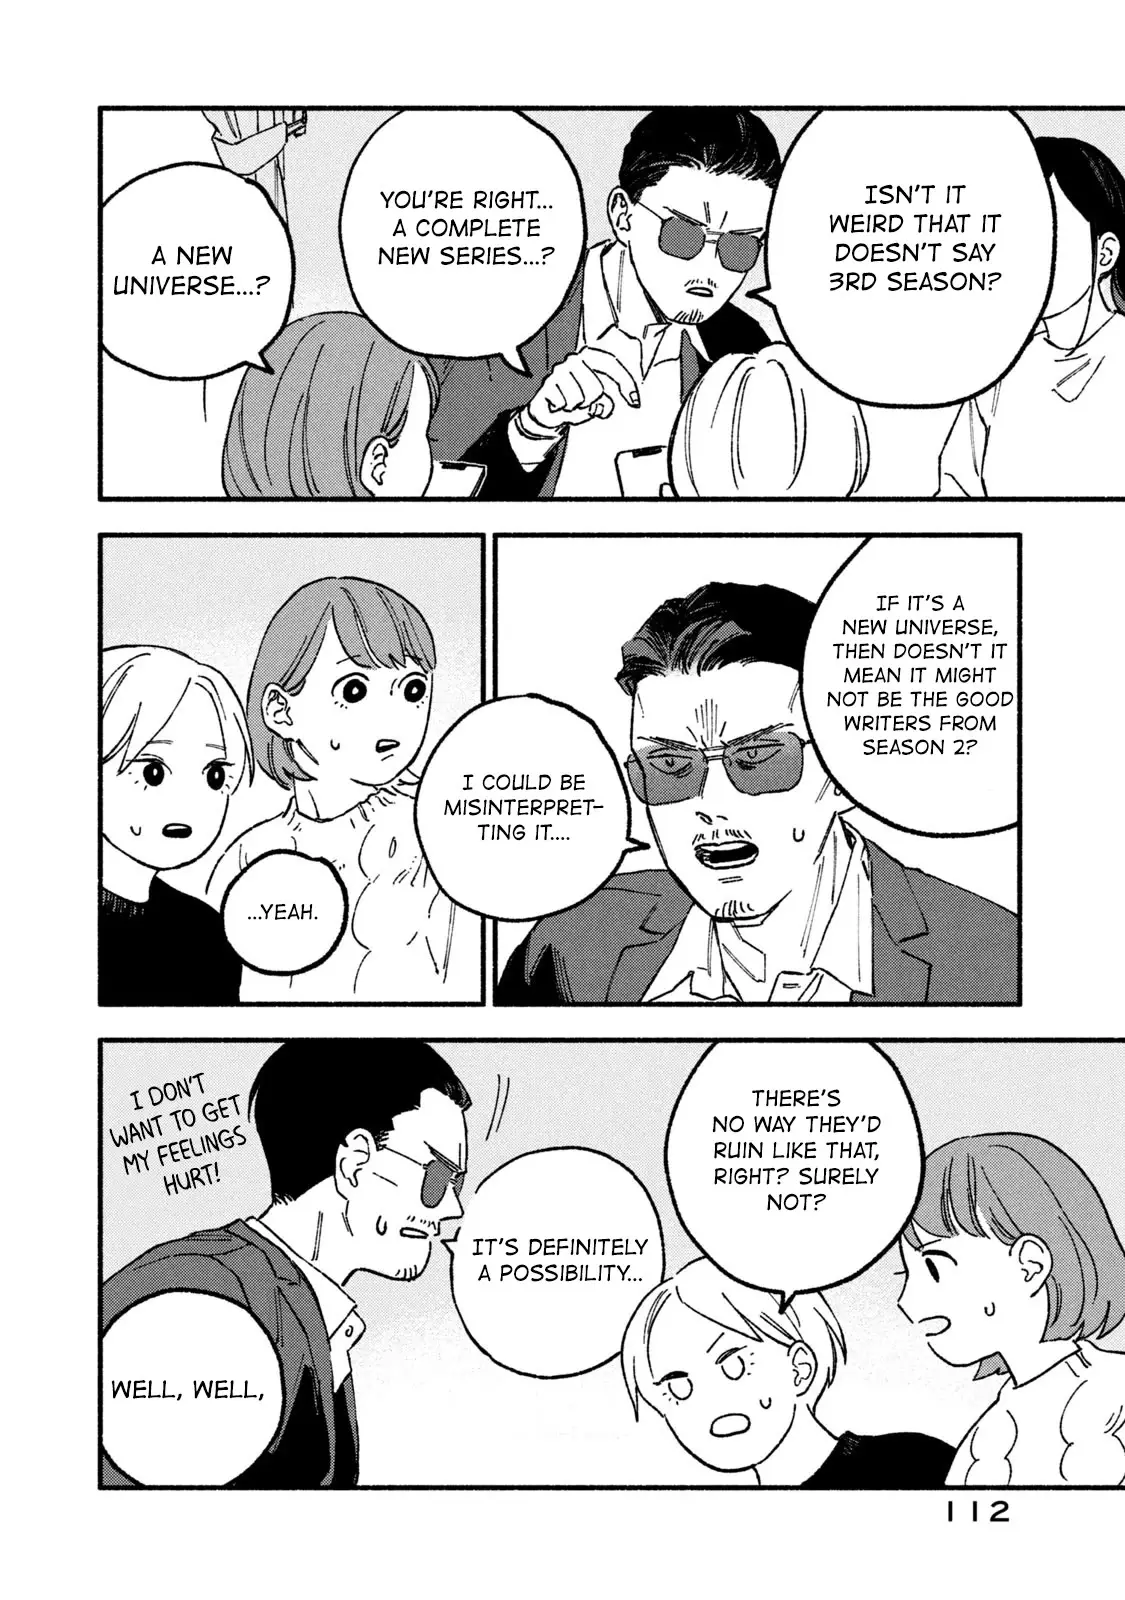 A Story About An Offline Meet-Up Between An Otaku And A Yakuza - 12 page 6-921962d8